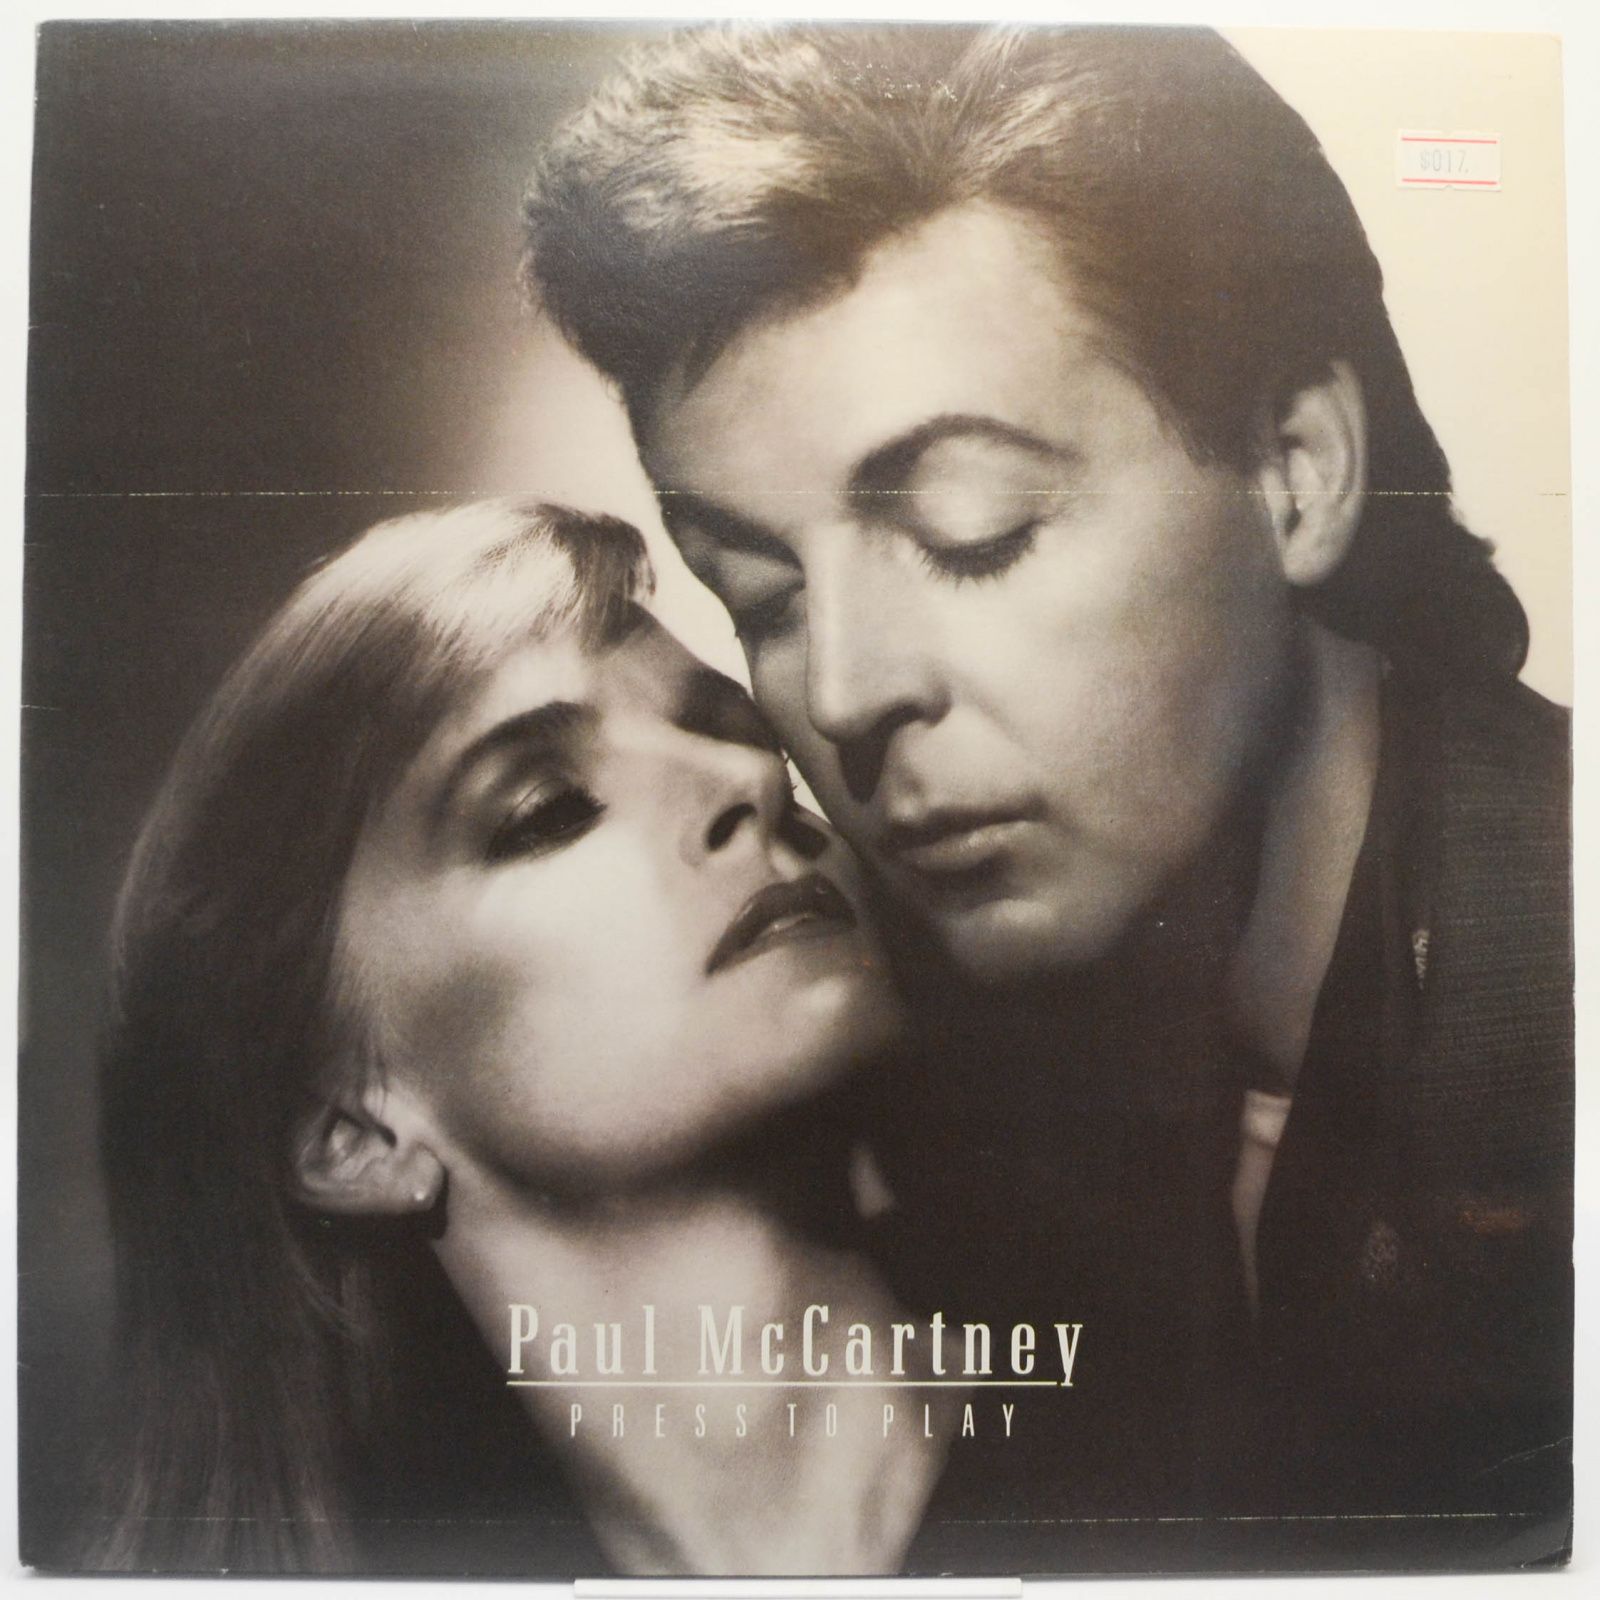 Paul McCartney — Press To Play, 1986